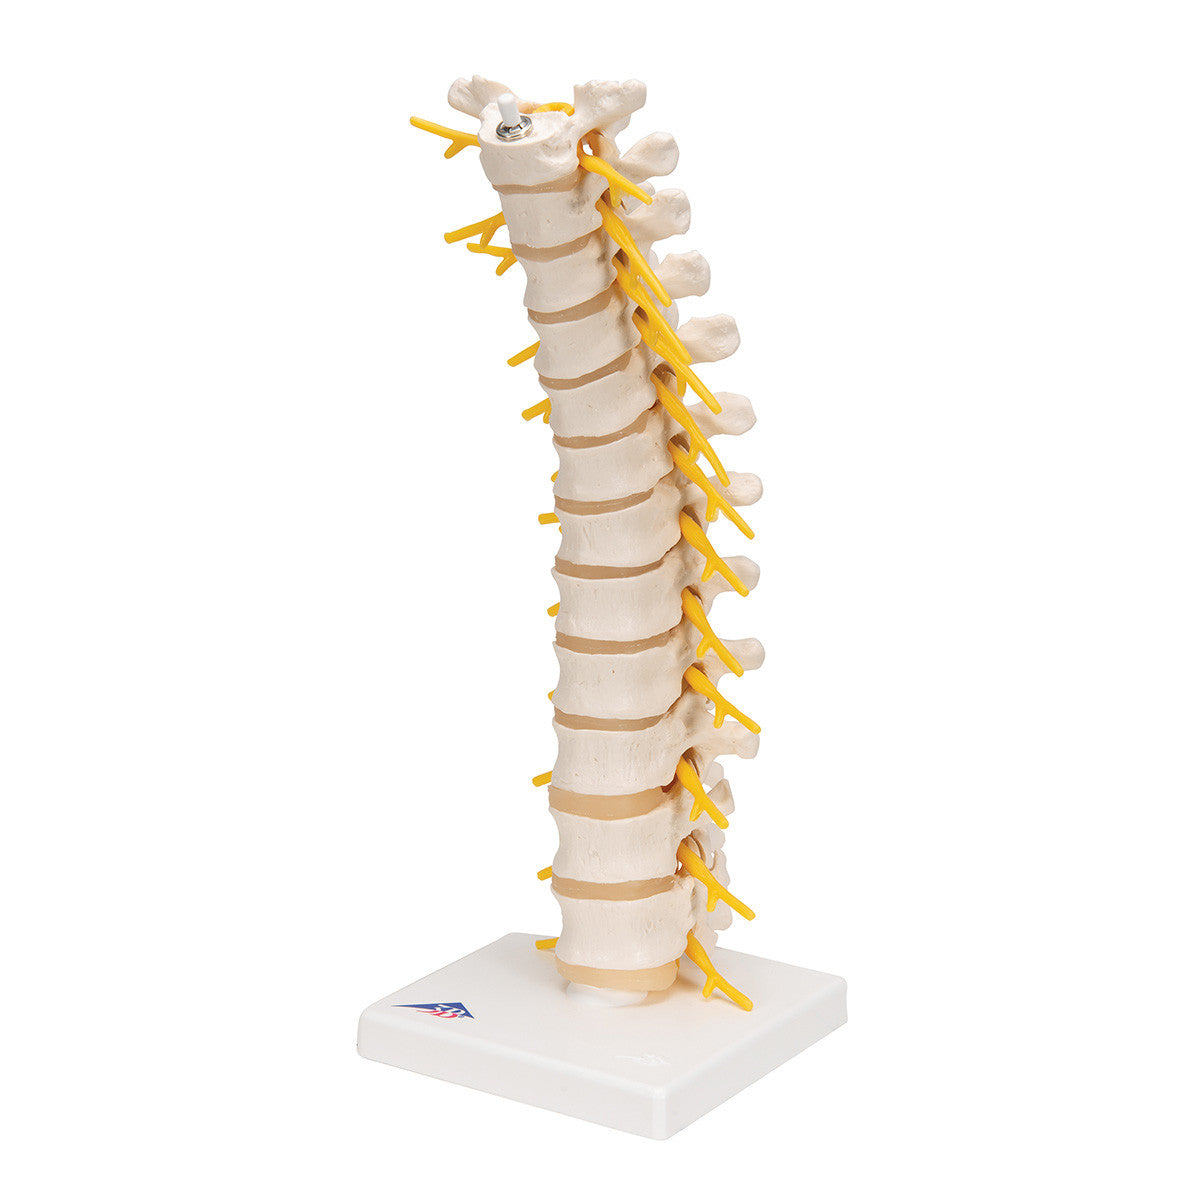 a73_06_1200_1200_thoracic-human-spinal-column-model-3b-smart-anatomy__31181.1589753040.1280.1280.jpg